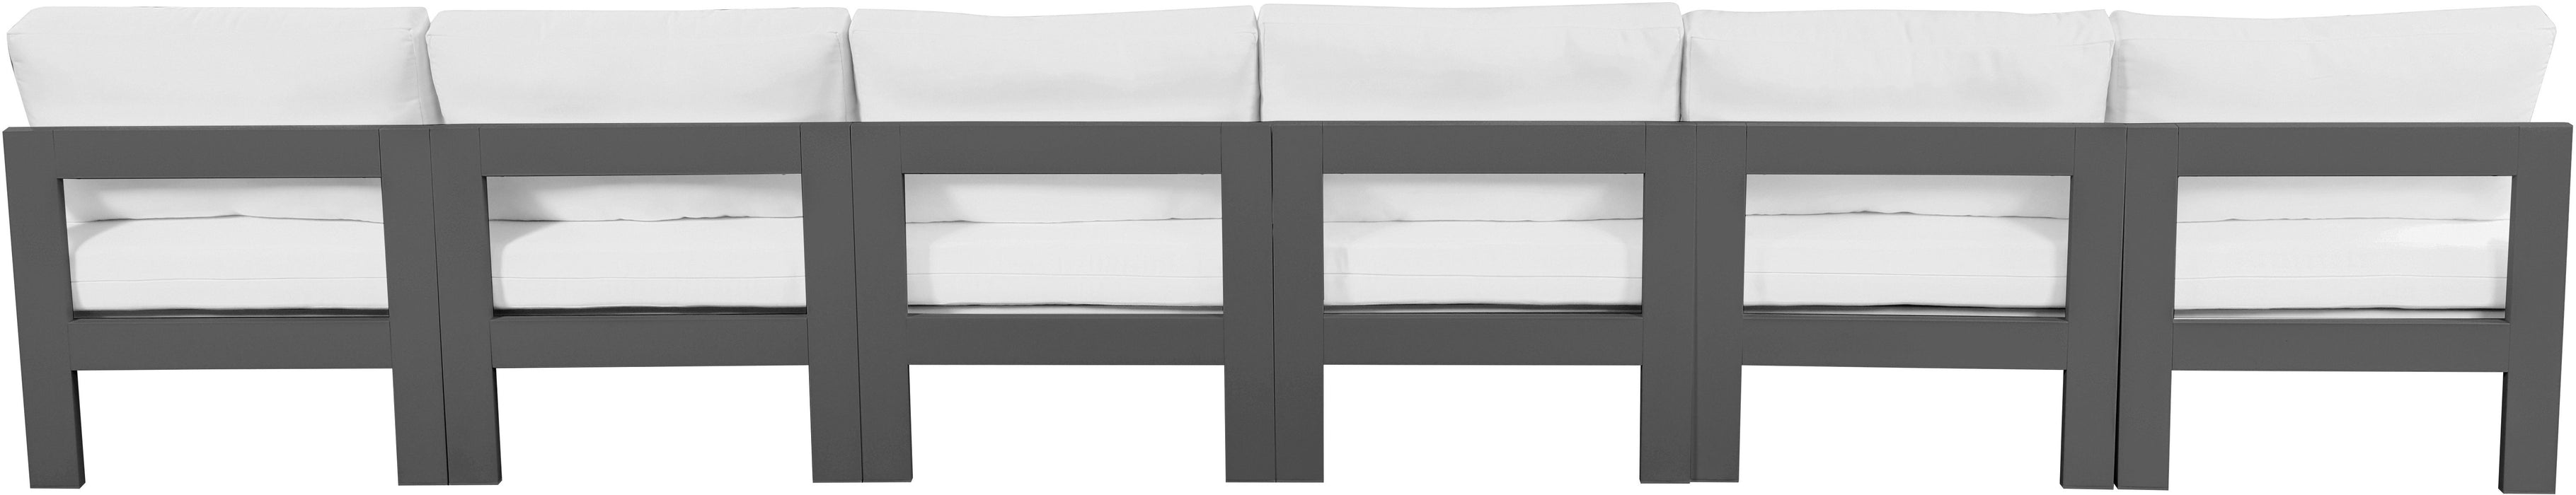 Nizuc - Outdoor Patio Modular Sofa Armless - White - Fabric